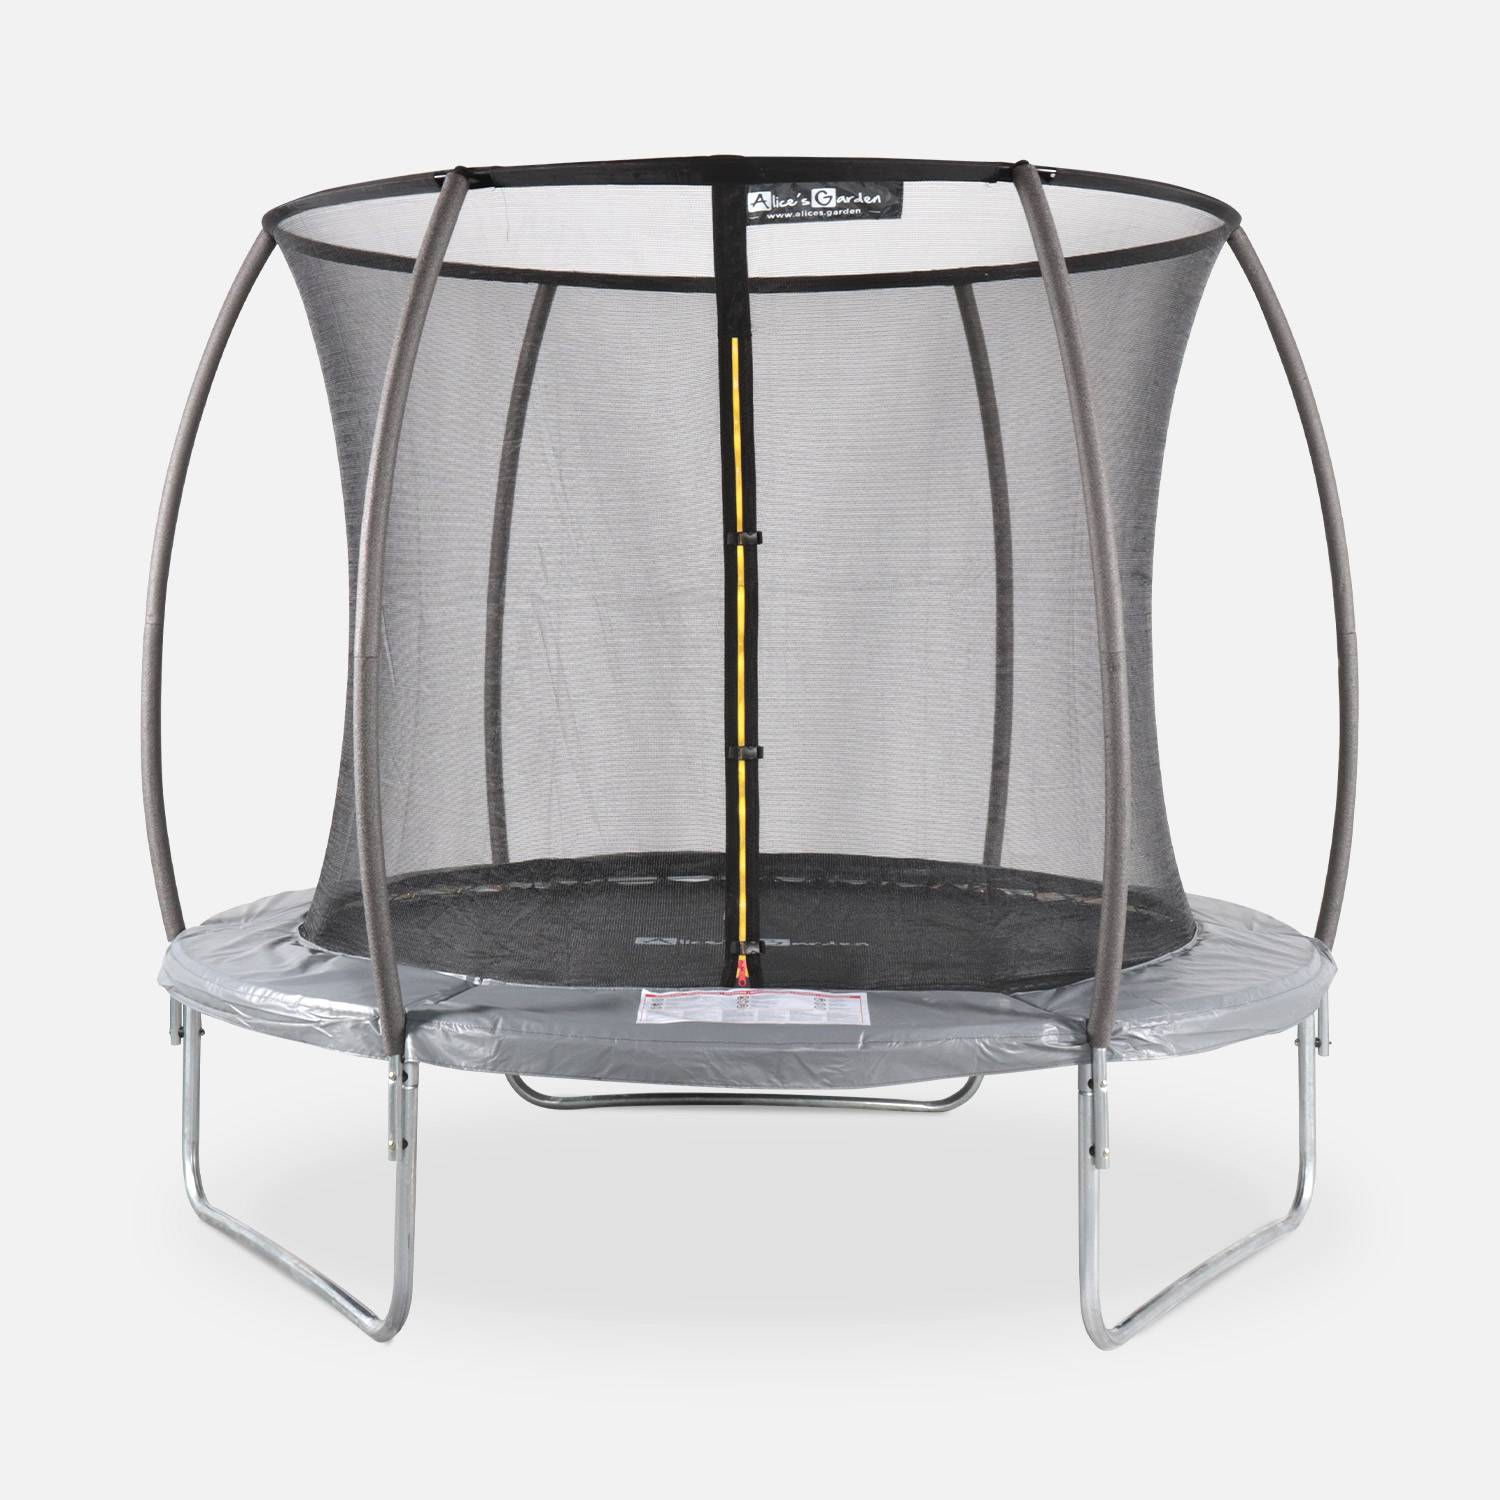 8ft trampoline with inner safety net for optimum safety - Ø250cm - Pluton Inner - Grey Photo1